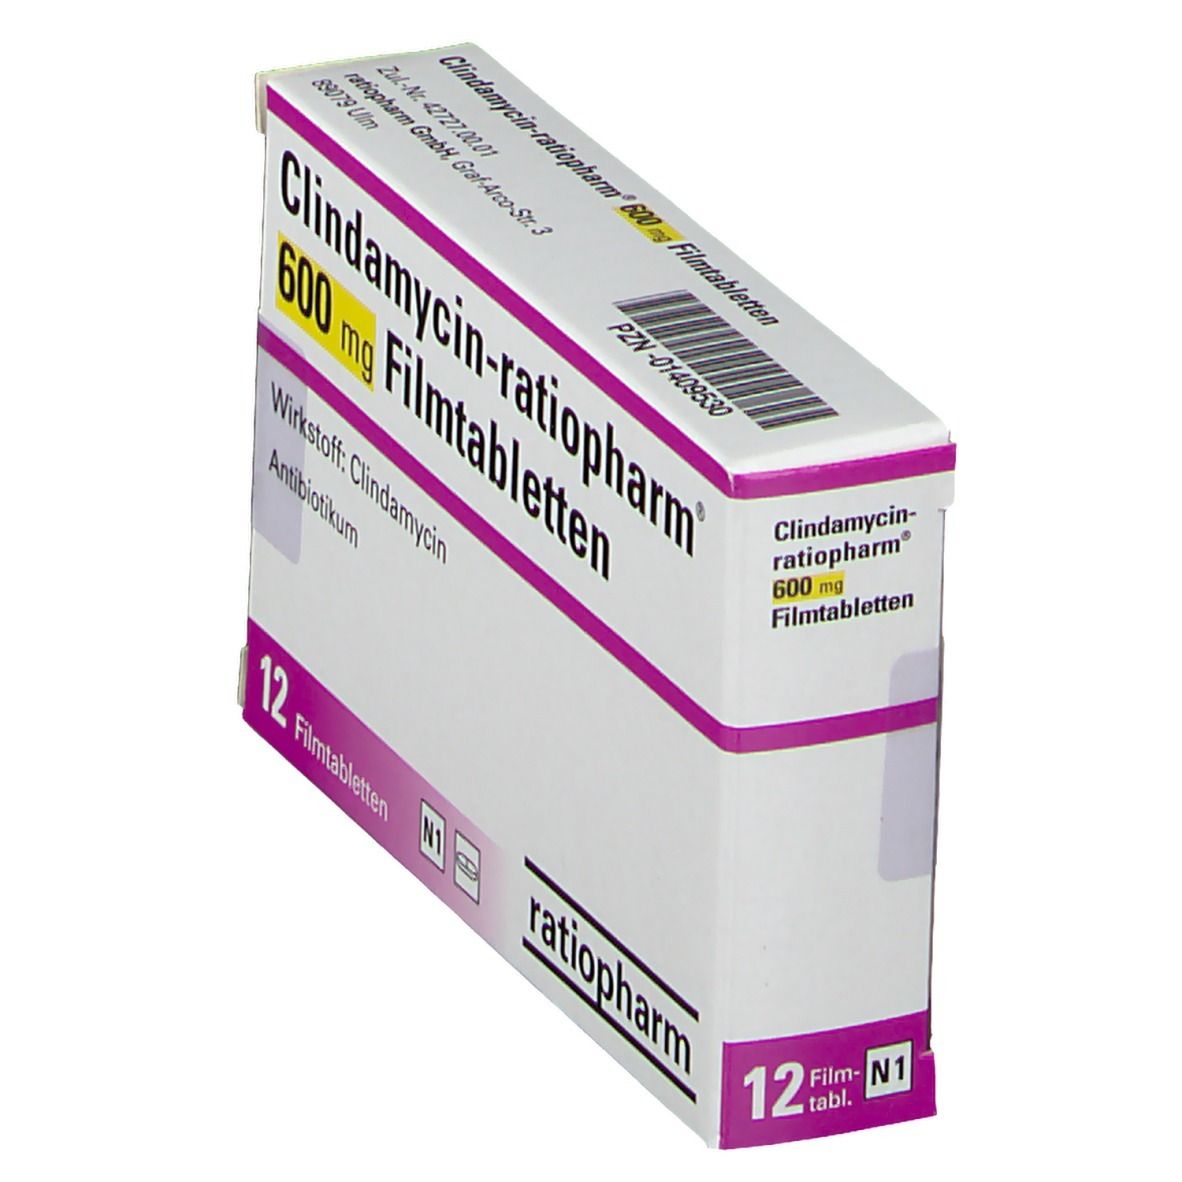 Clindamycin-ratiopharm® 600 mg